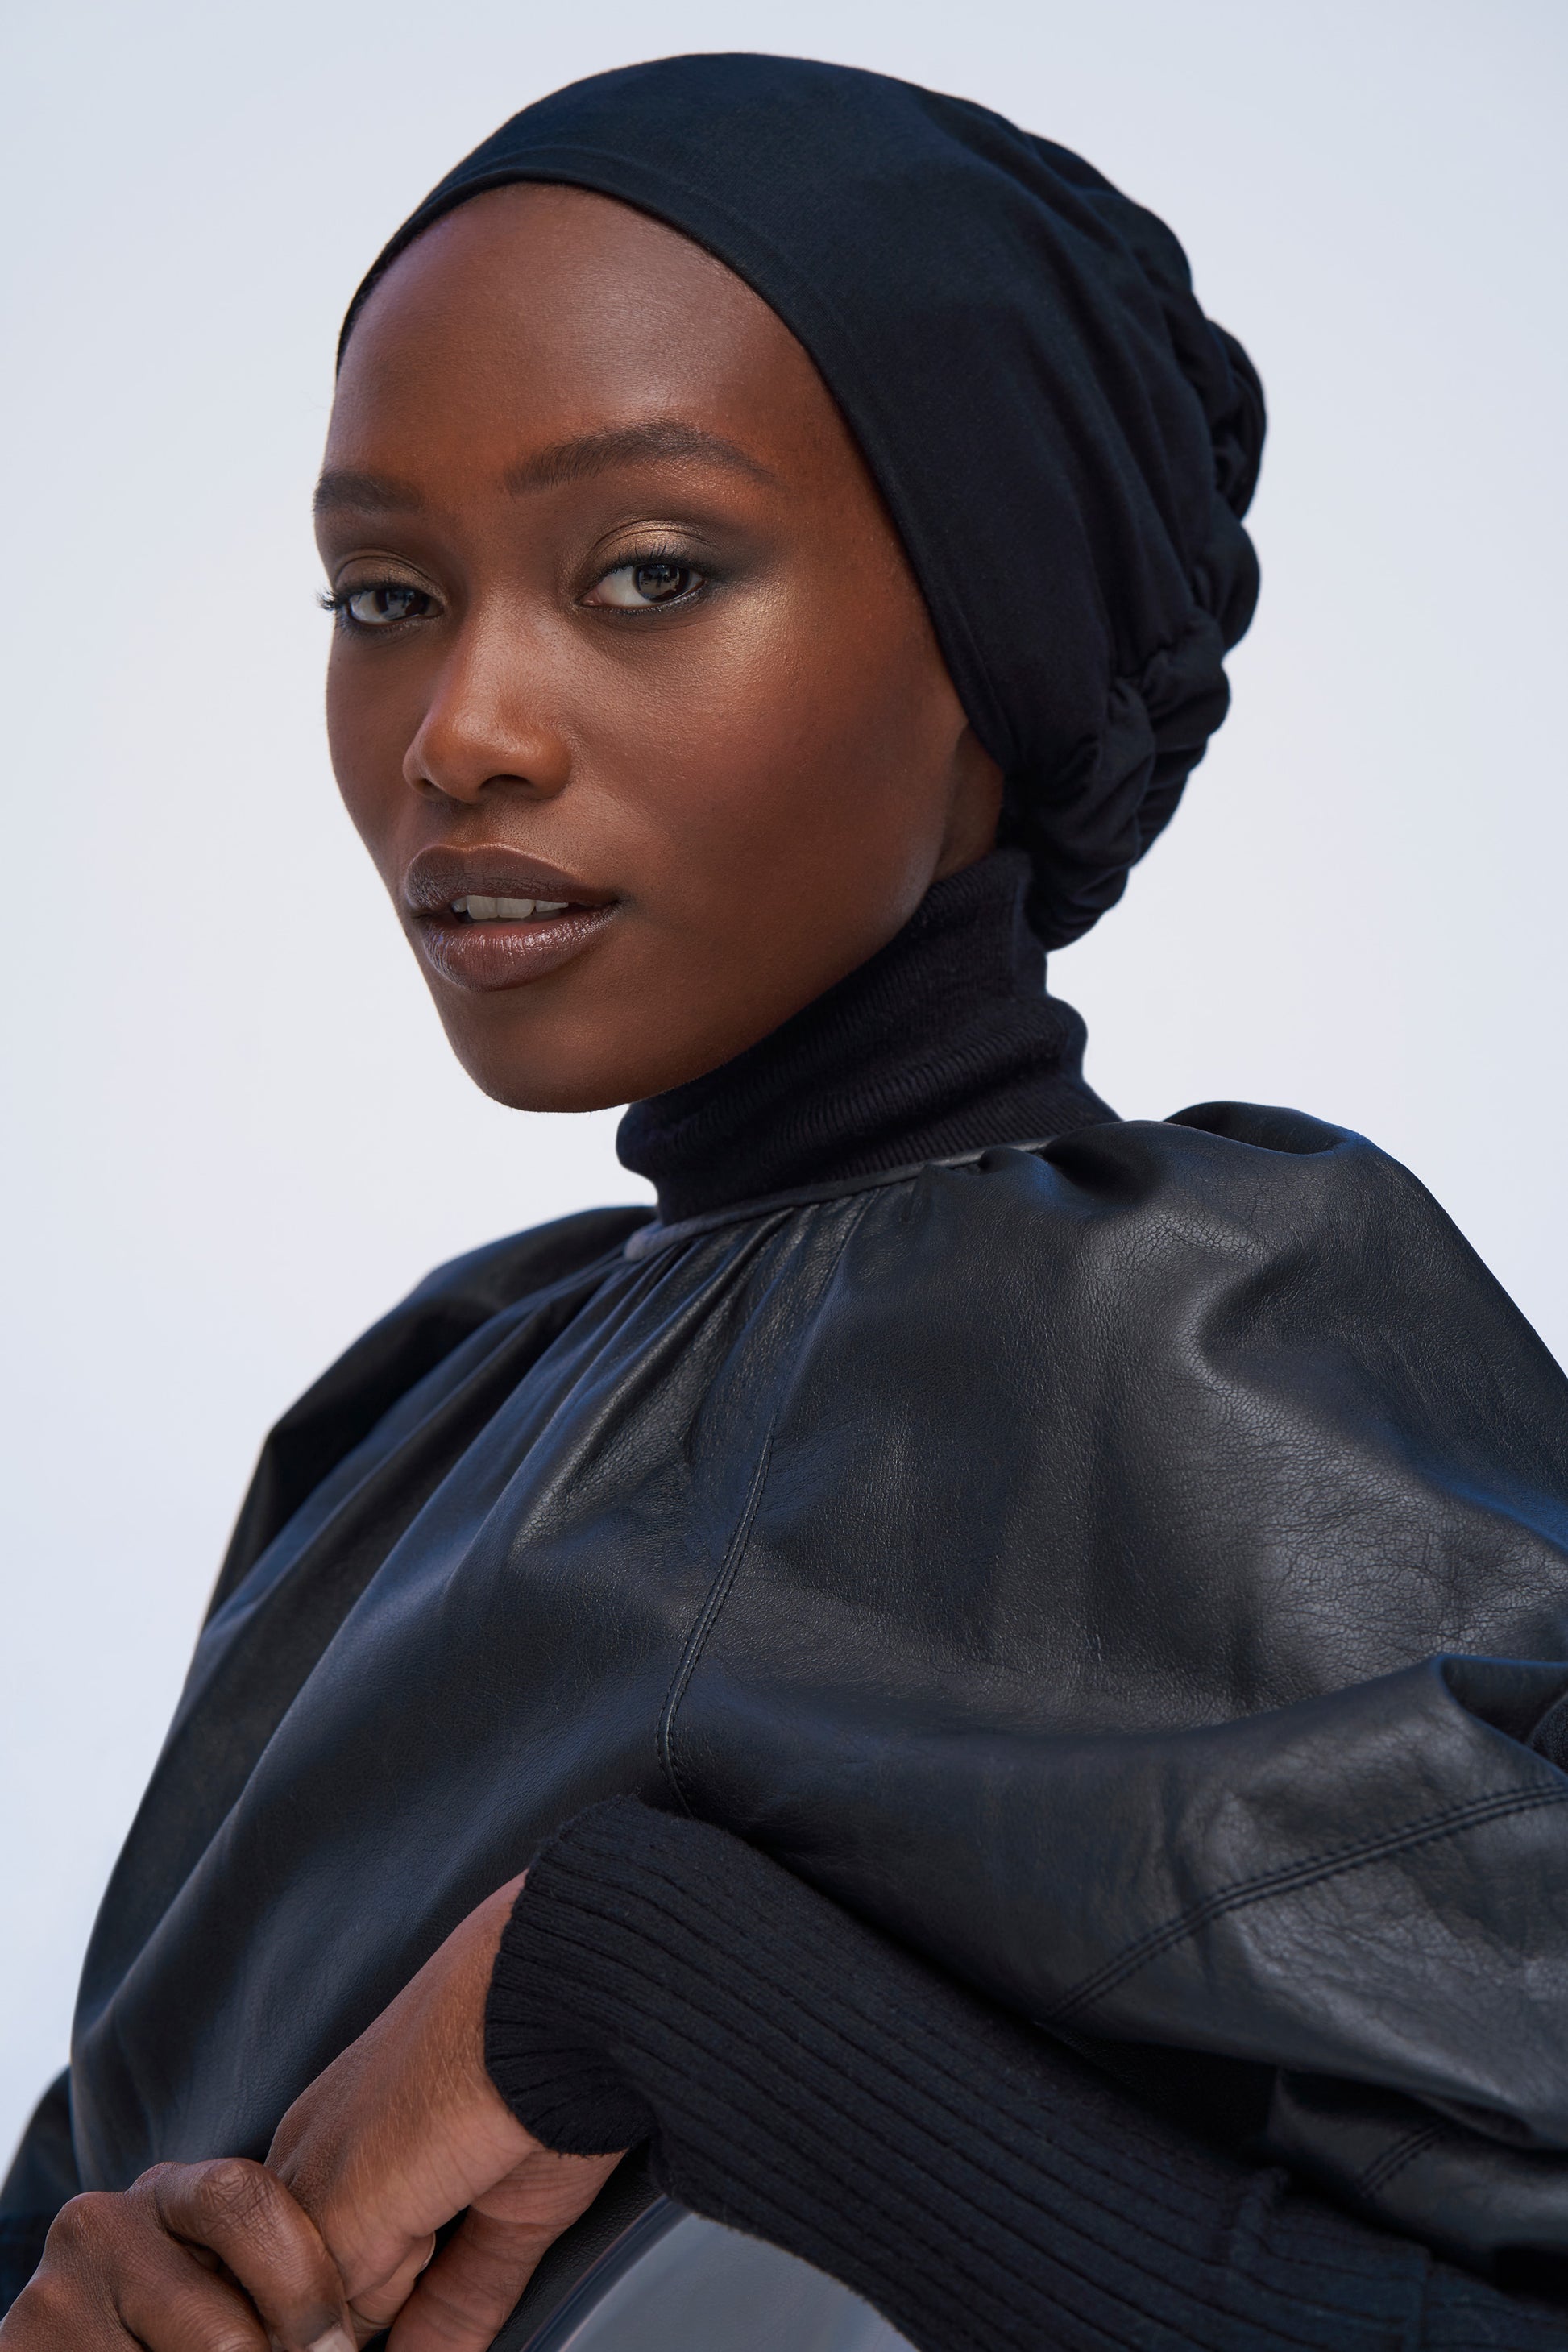 Bella Hijabs Satin Lined Under Cap - Black